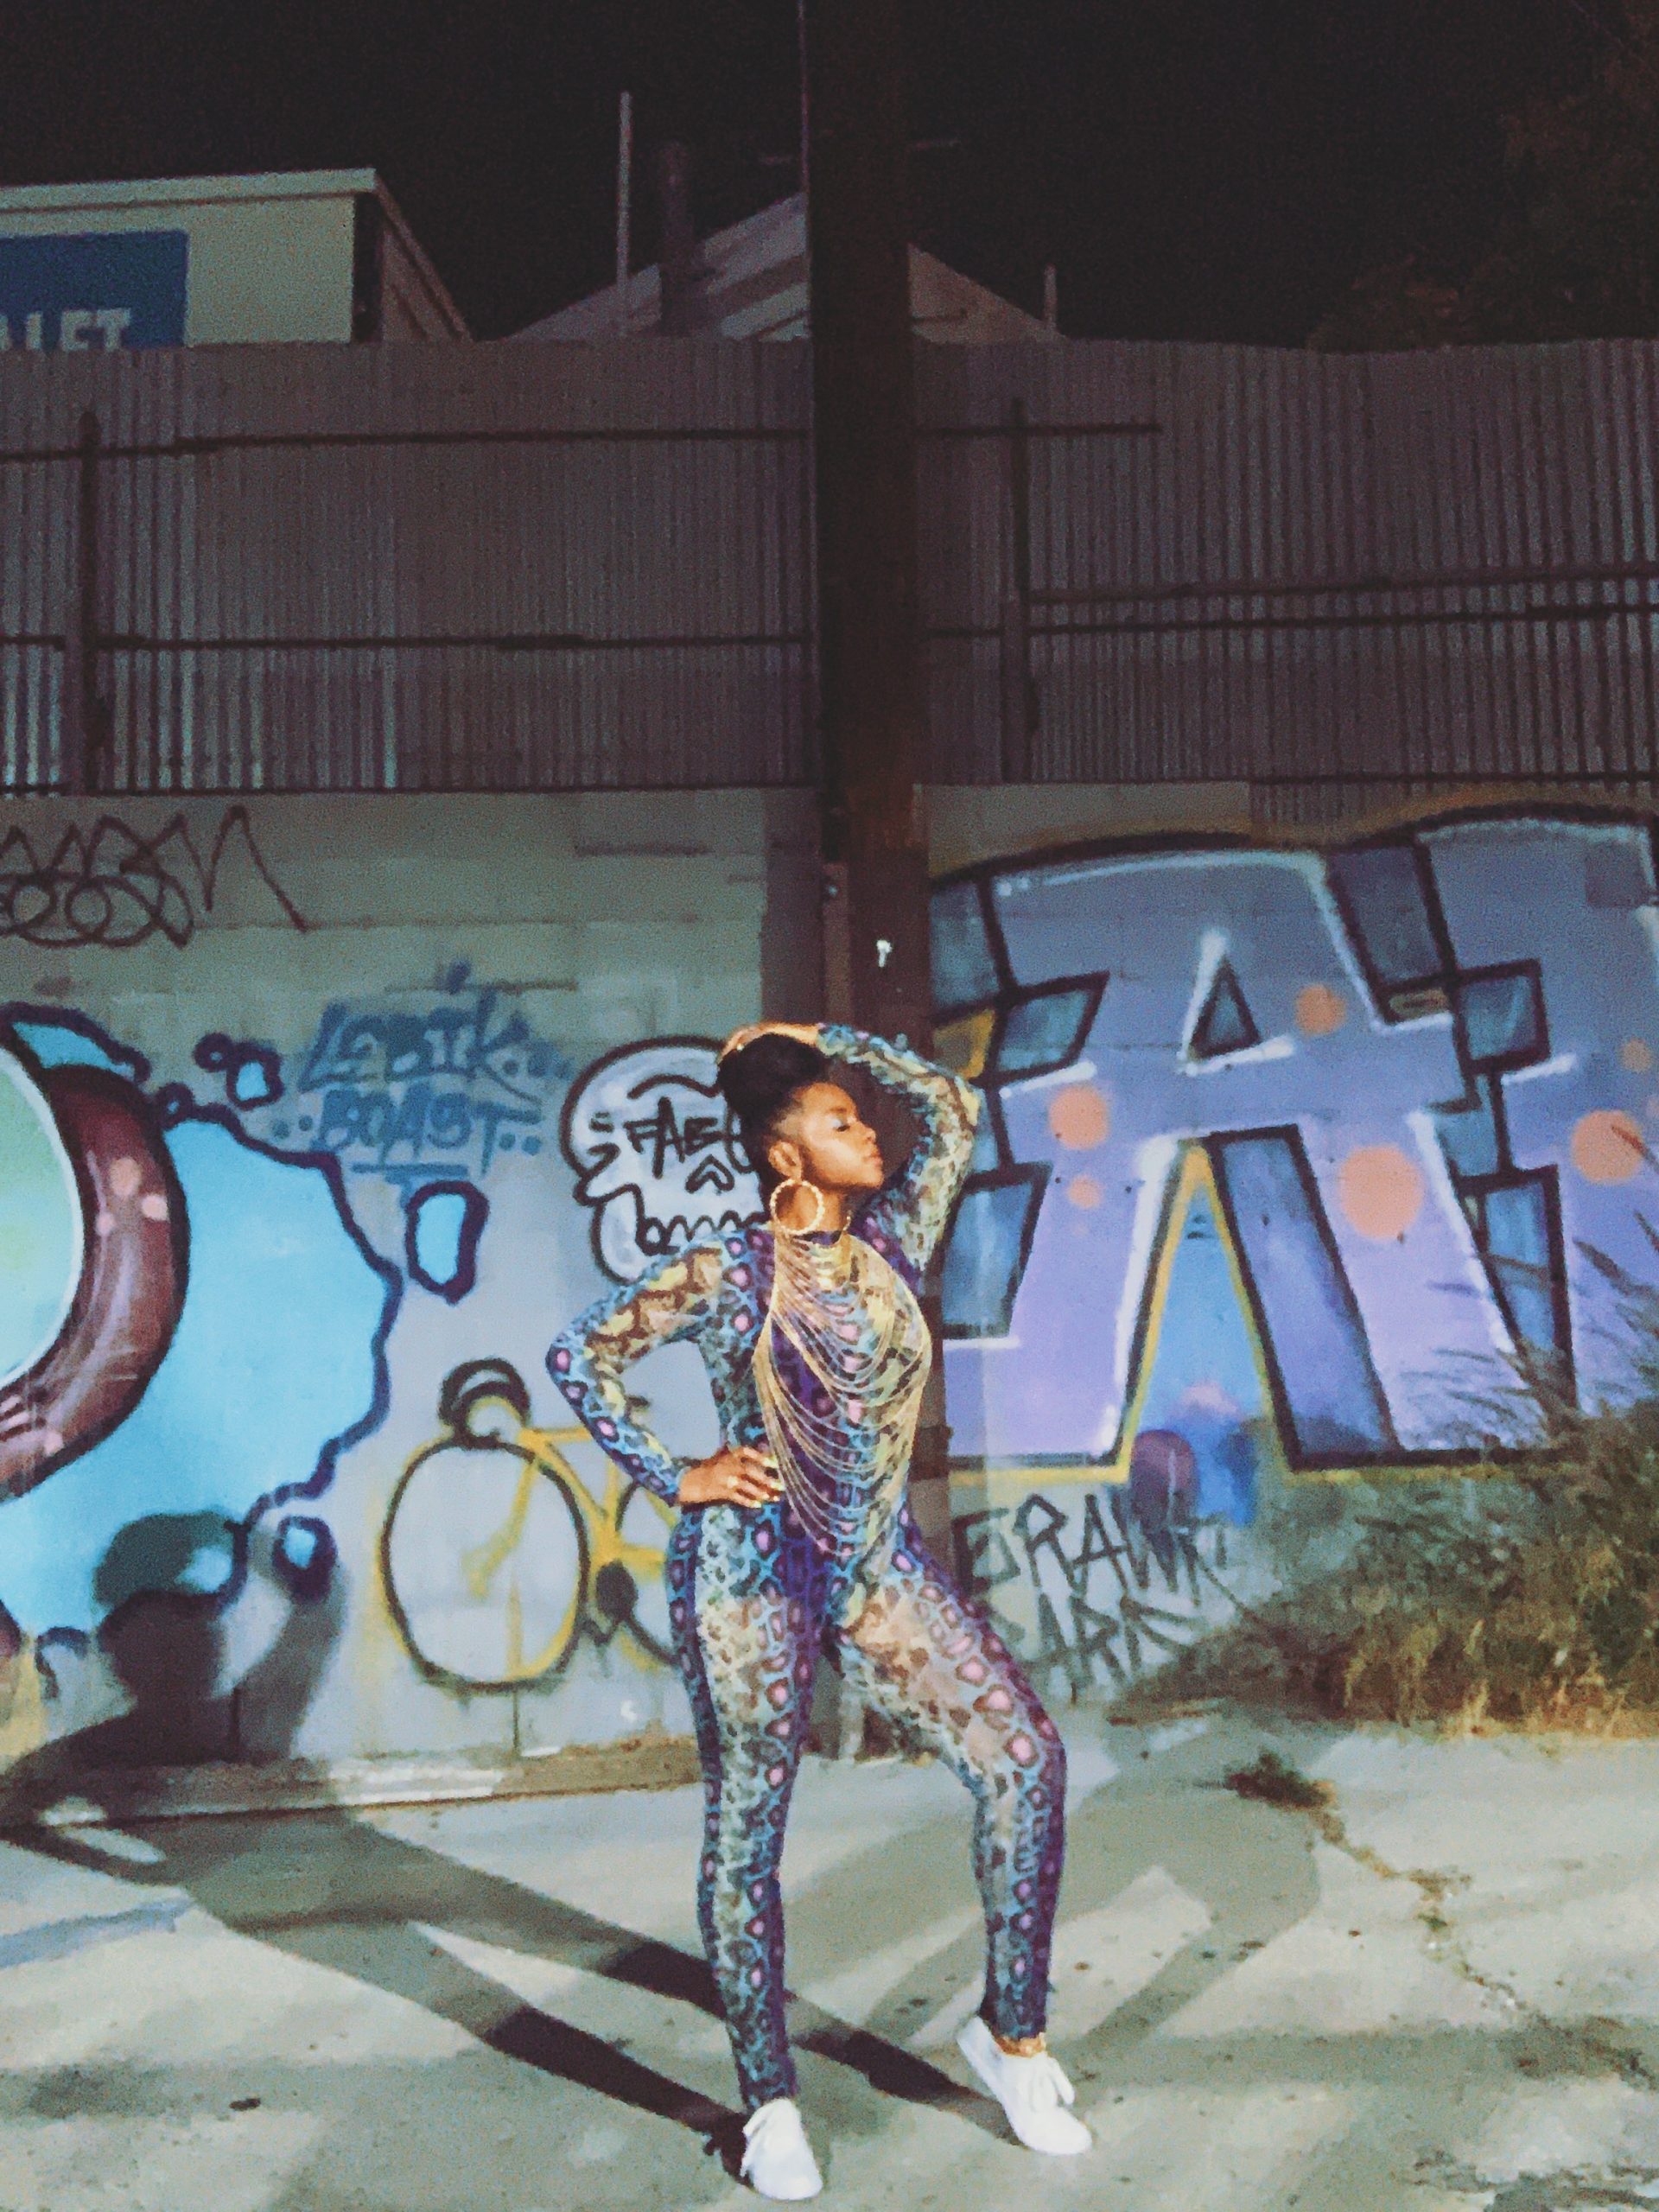 BTS Photo of NFT Artist Latahsha posing in front of graffiti